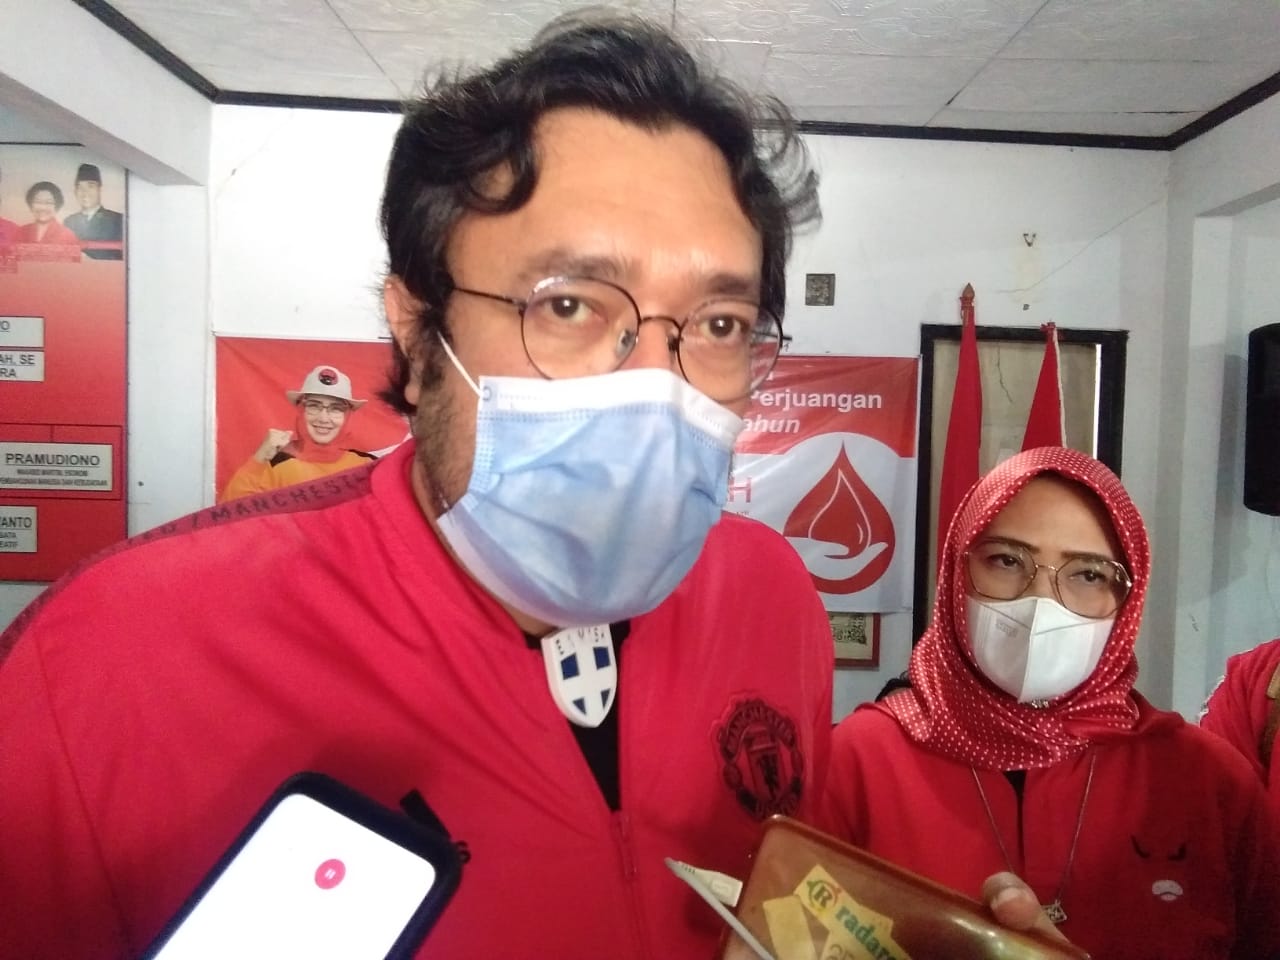 Soal Pilkada Kota Cirebon, Ono Surono: Mari Bung Rebut Kembali